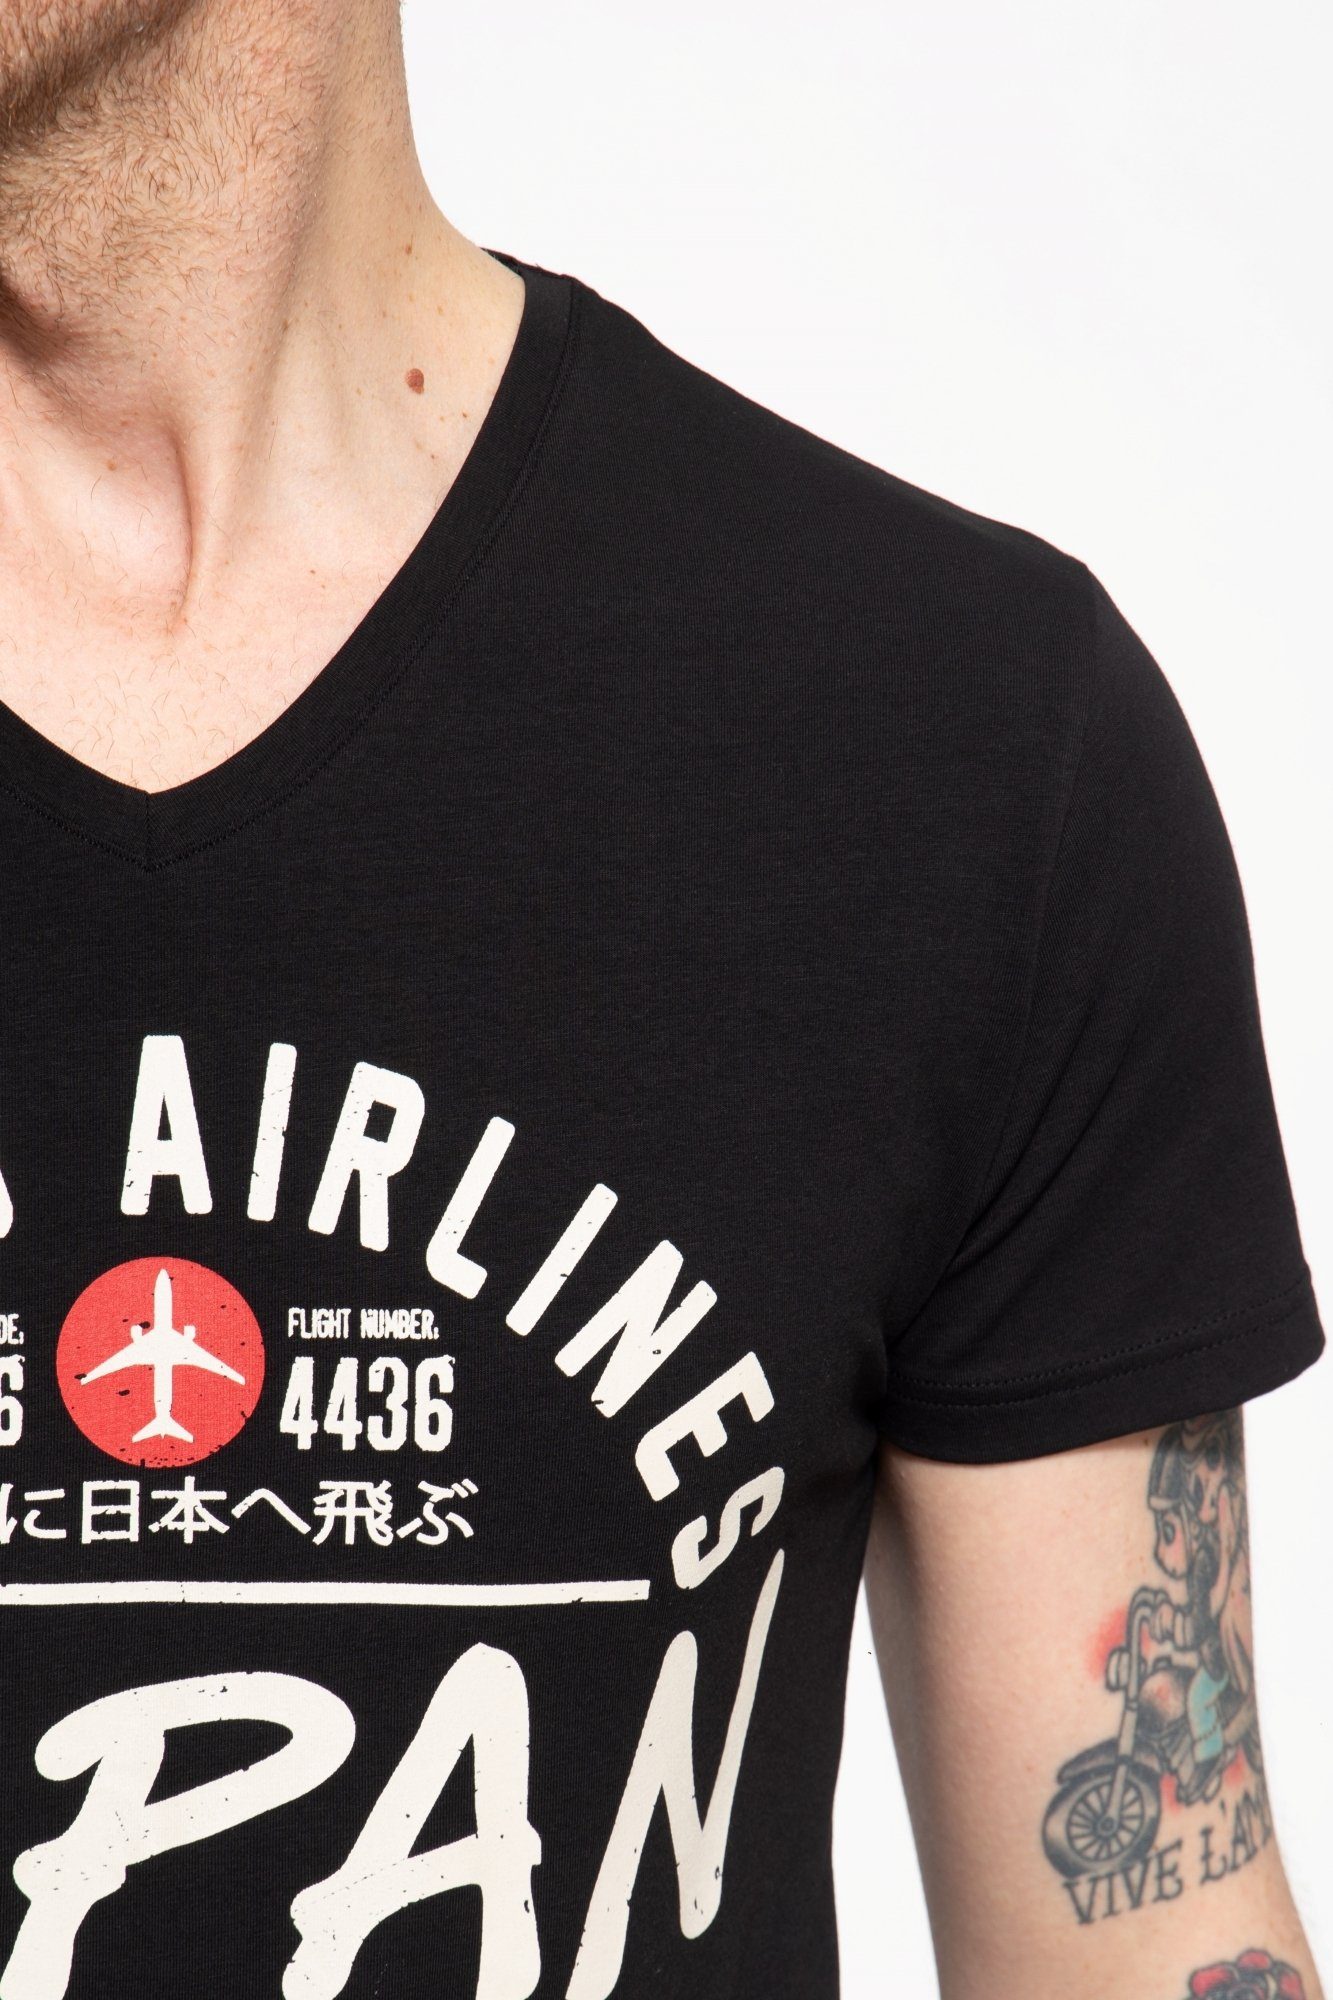 schwarz Tanaka T-Shirt Akito mit Frontprint Flight legerem